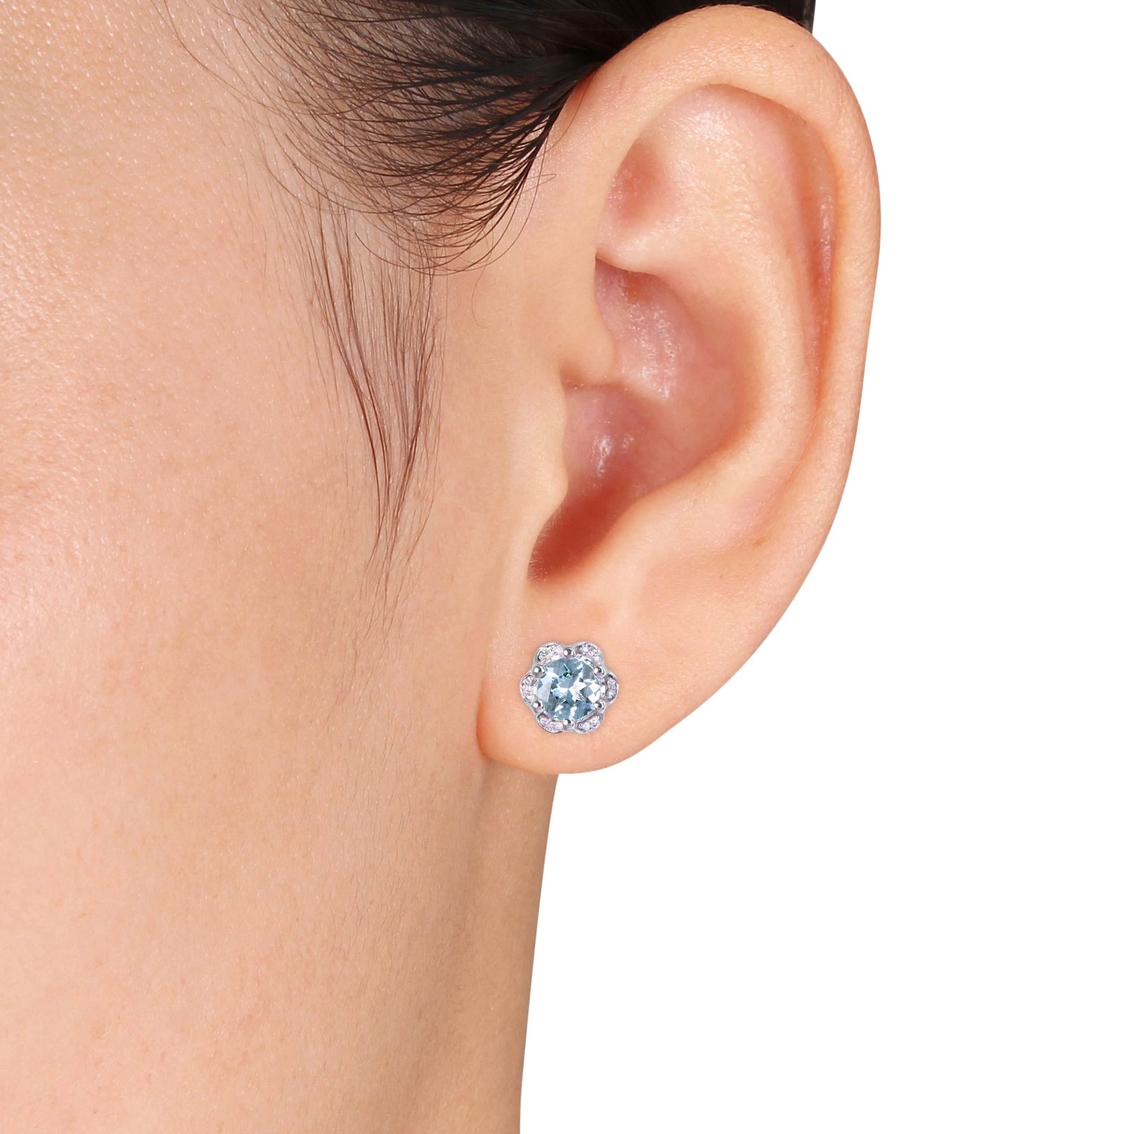 Sofia B. 14K White Gold Aquamarine and Diamond Accent Flower Stud Earrings - Image 2 of 2